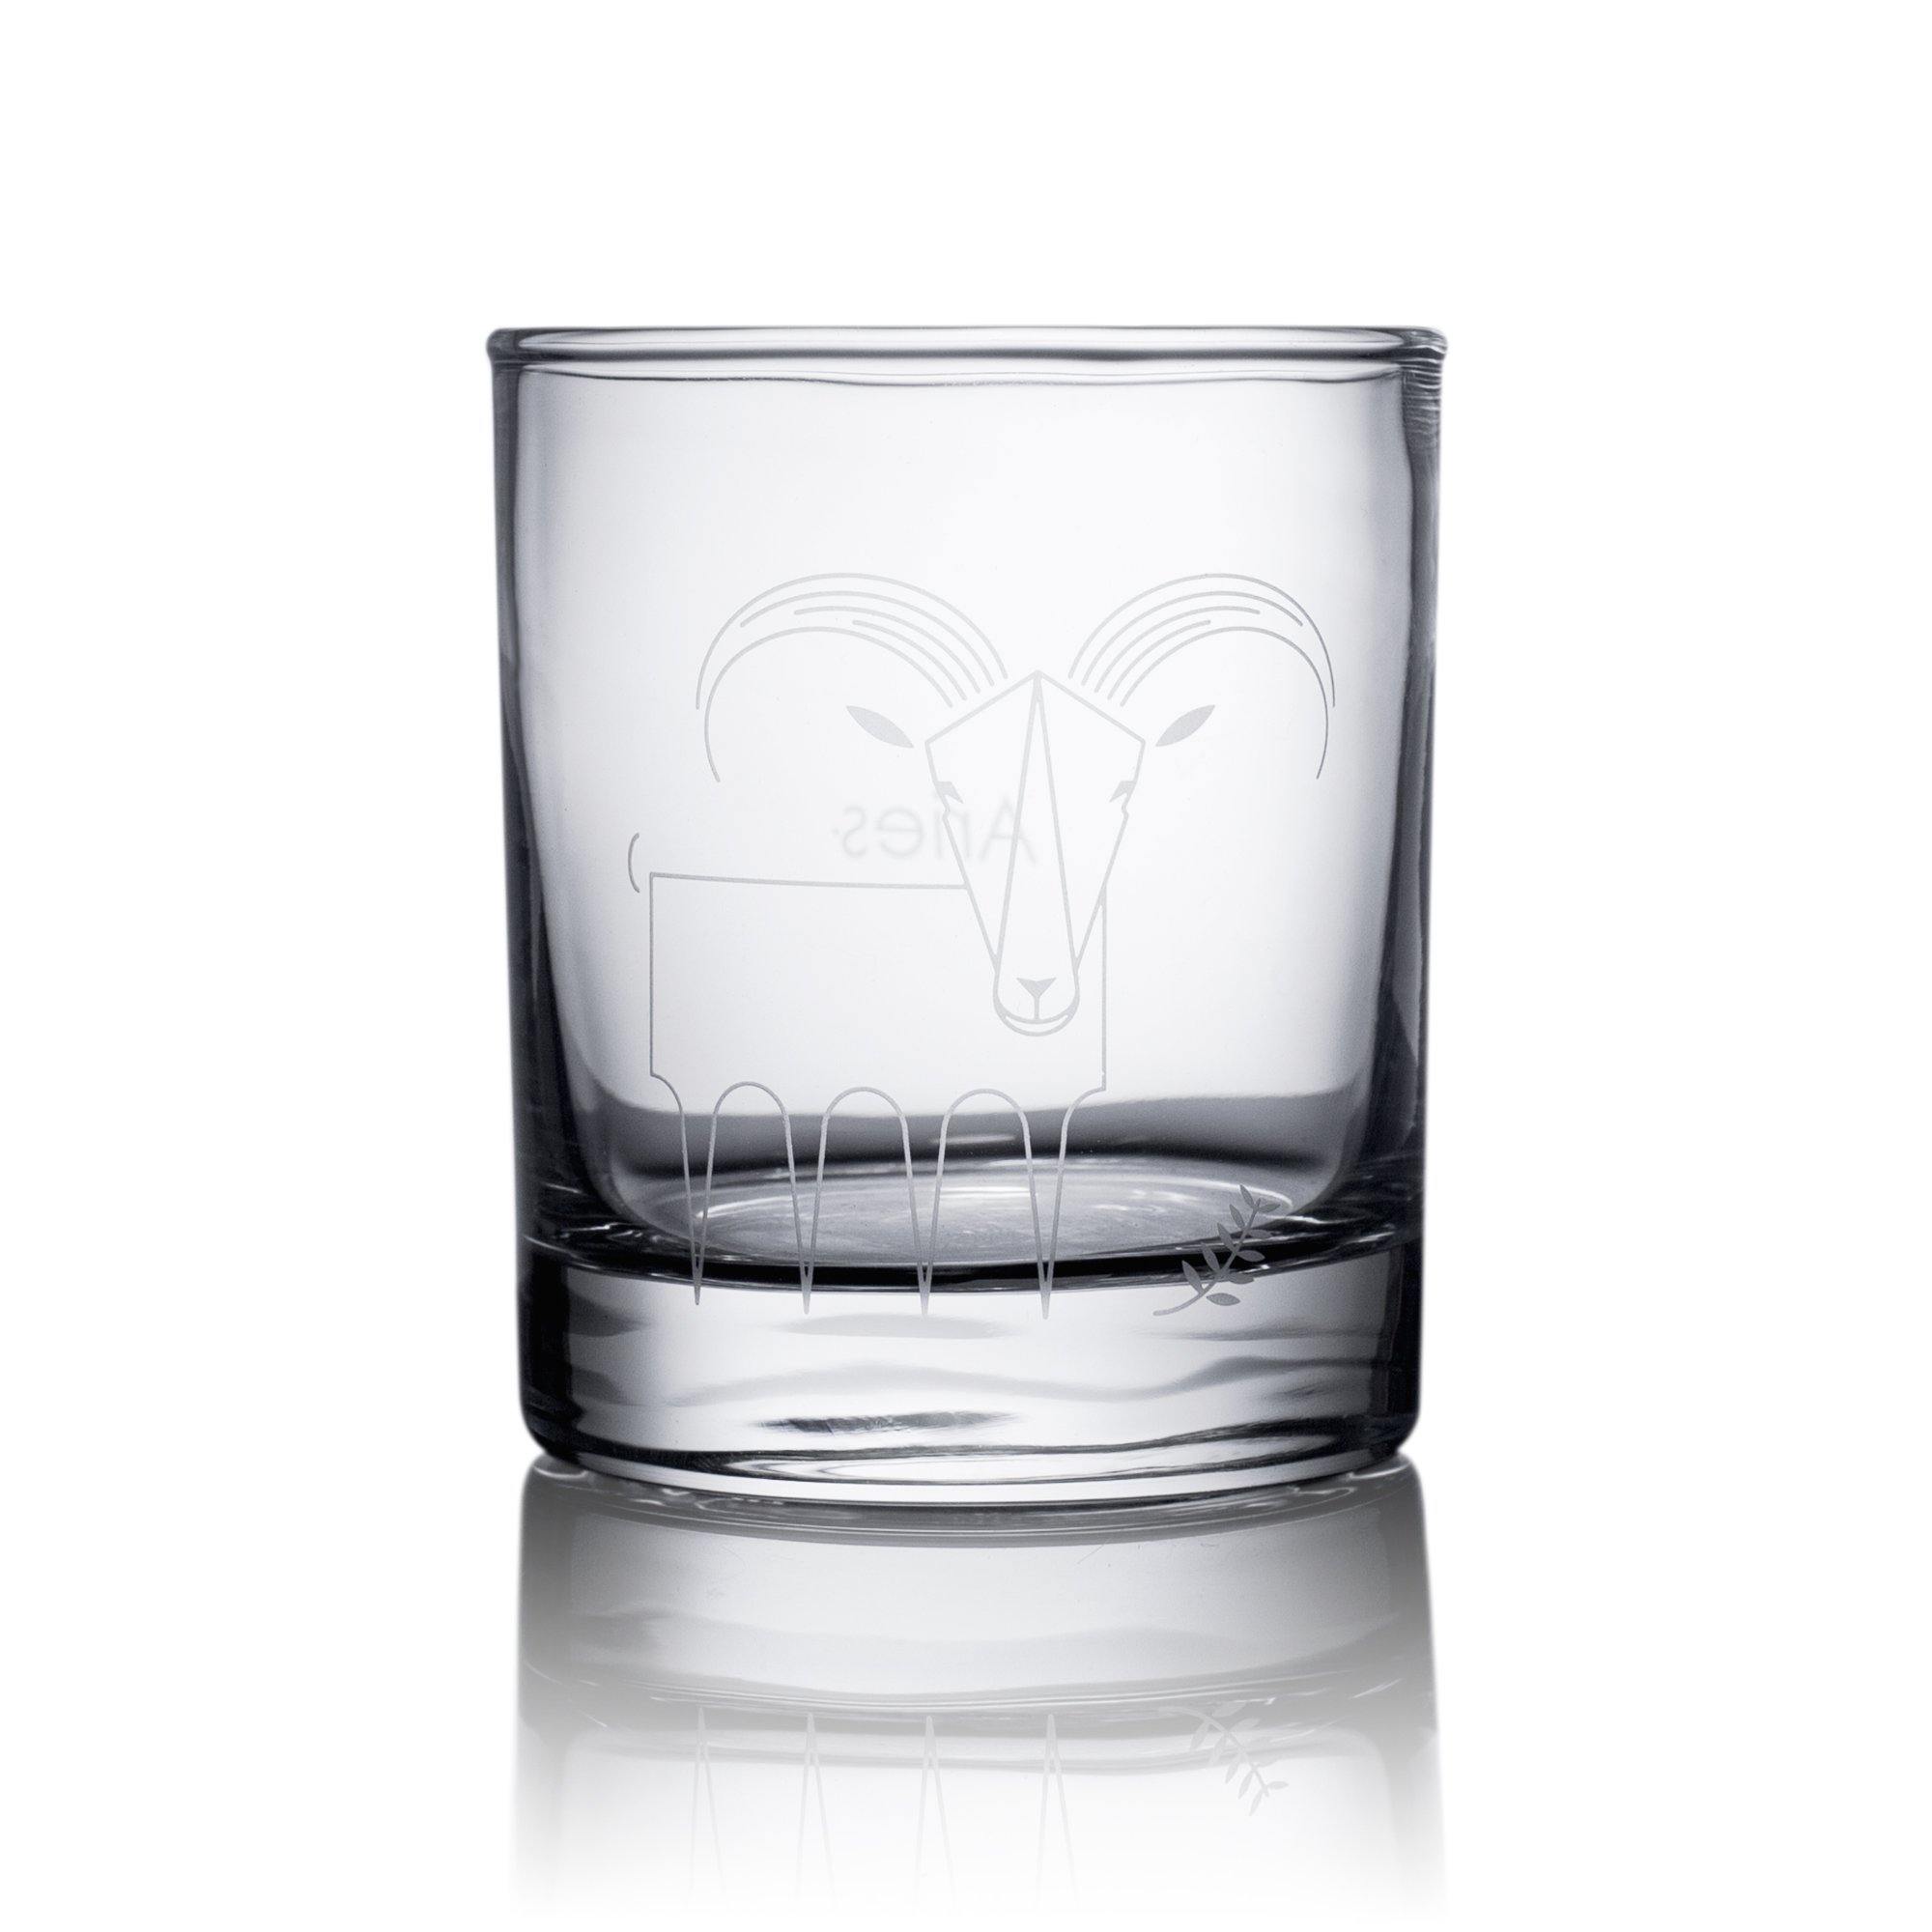 Constellation whiskey glasses - o3designstudio